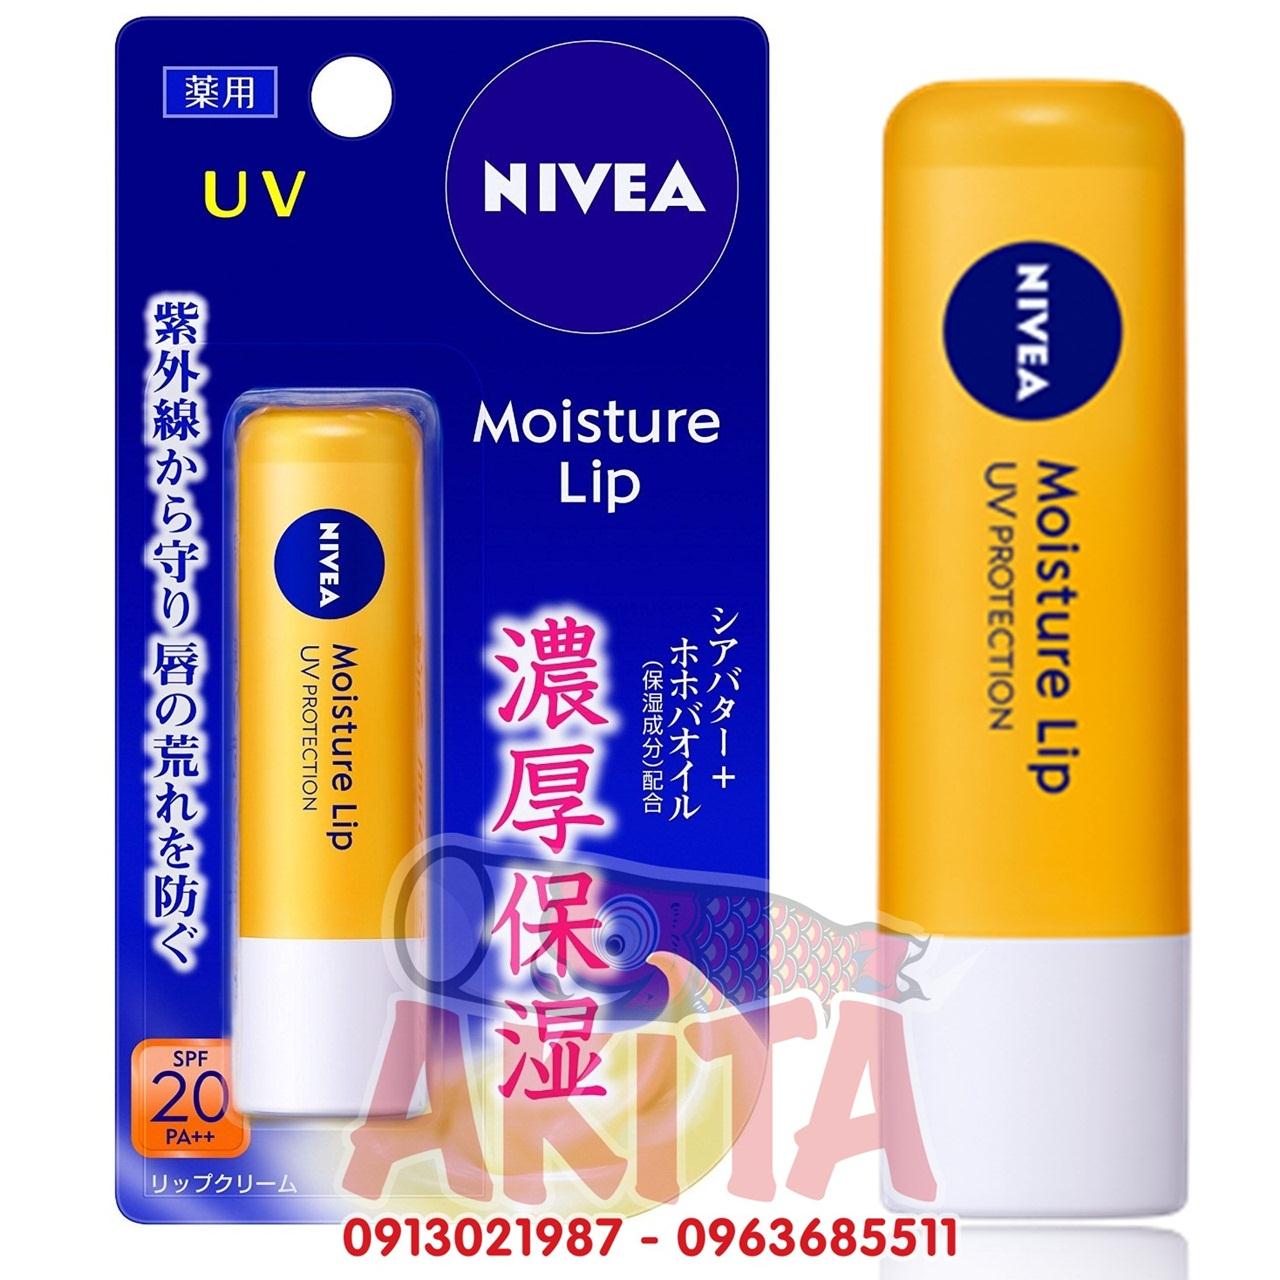 Nivea Moisture Lip - UV Protection